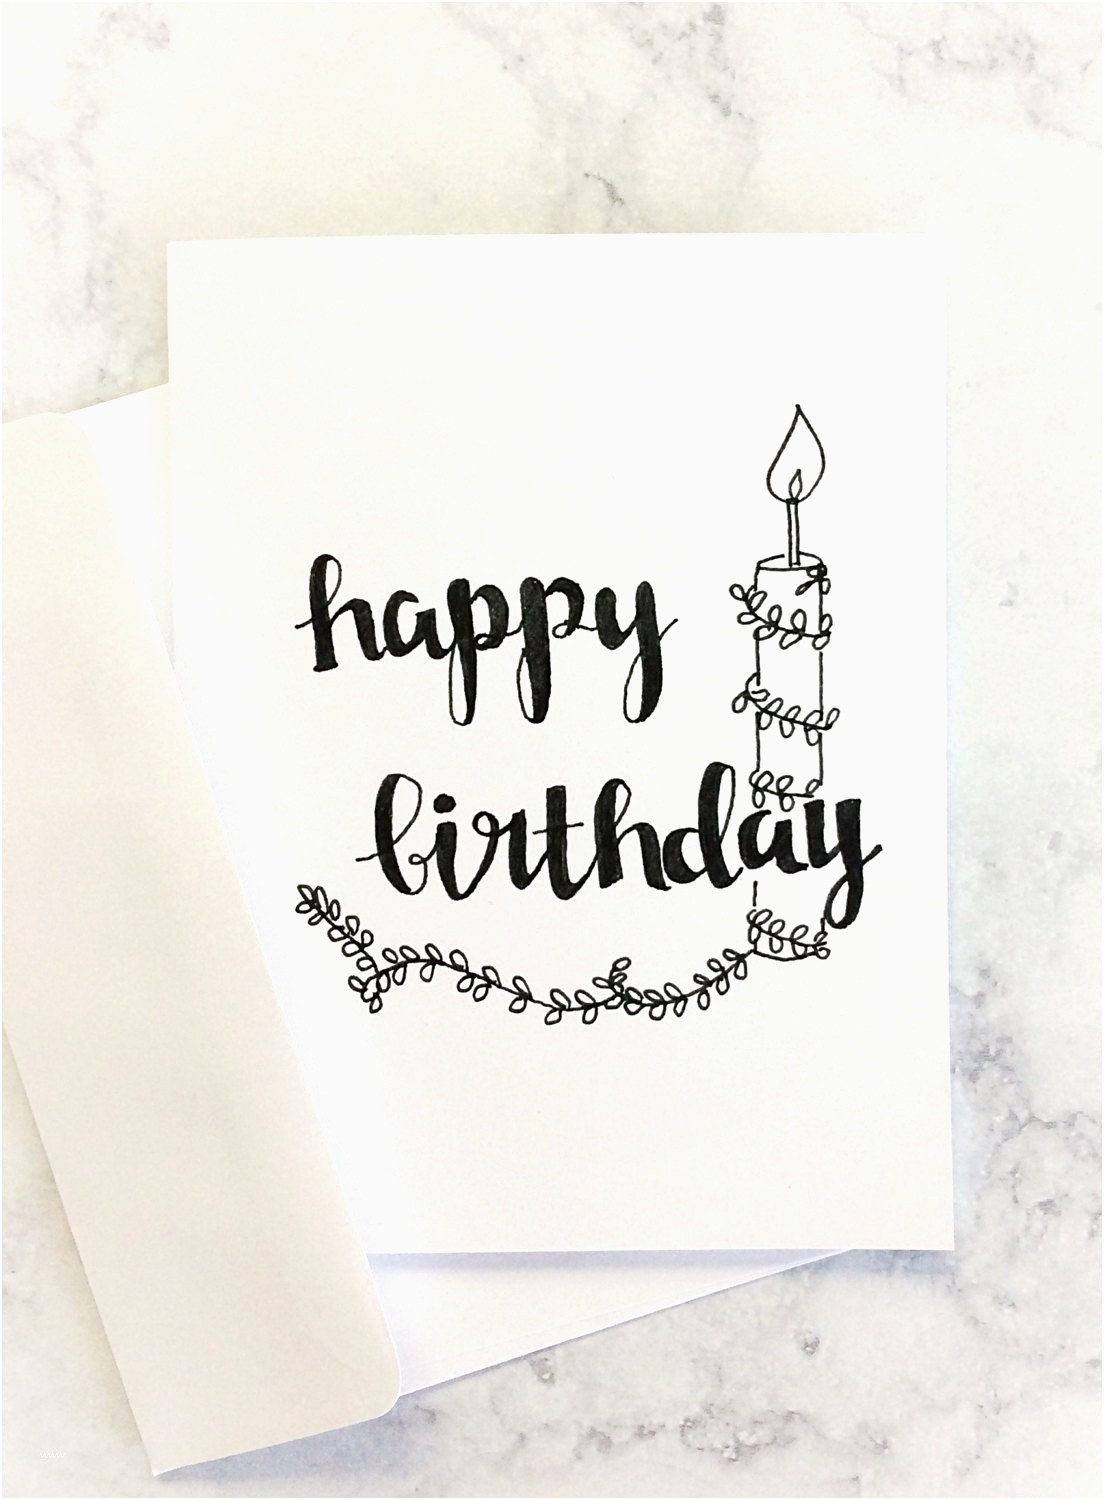 Birthday Card Ideas For Best Friend Creative Birthday Card Ideas For Best Friend Fresh Awesome Bff